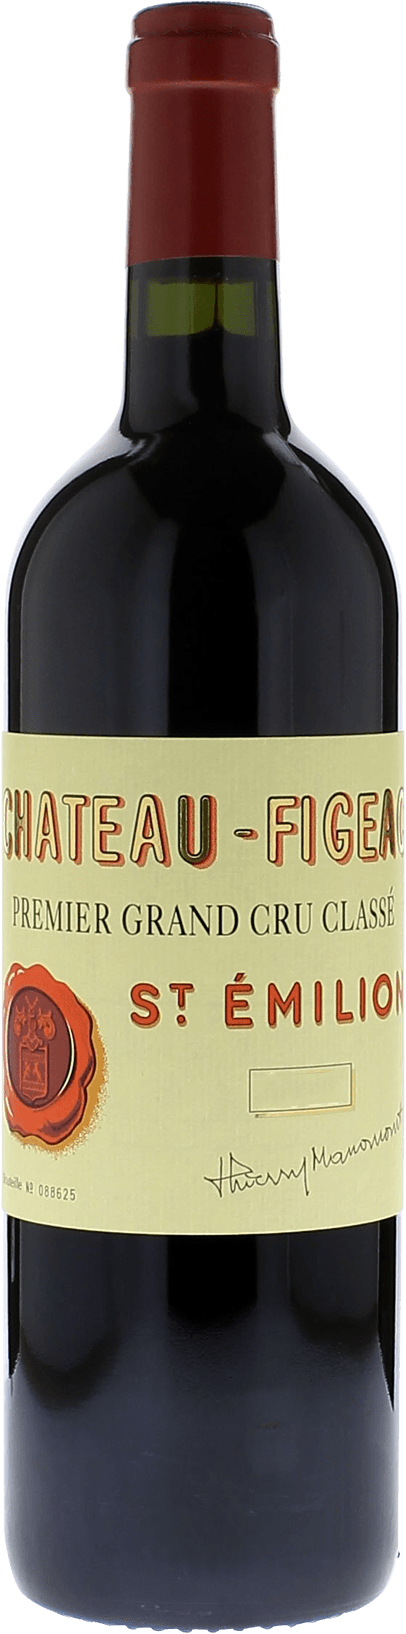 Figeac 1994 1er Grand cru B class Saint-Emilion, Bordeaux rouge